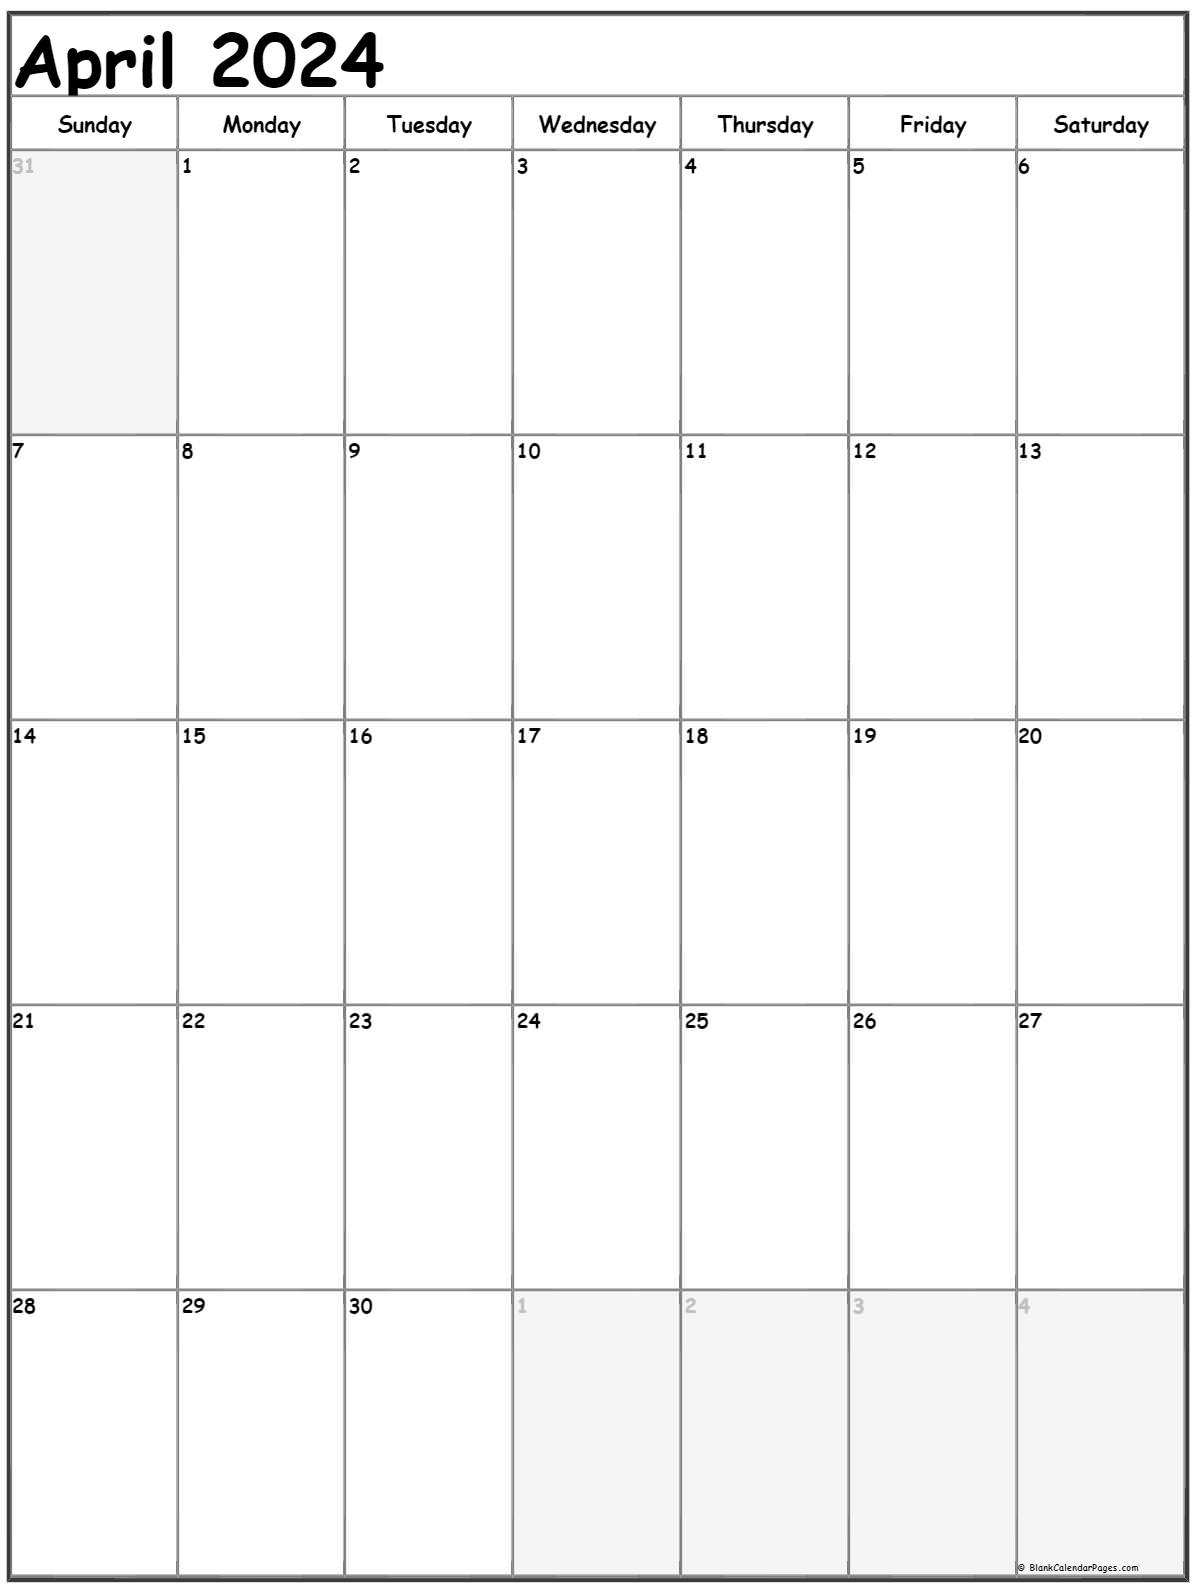 april-2023-blank-calendar-template-april-2023-calendar-free-printable